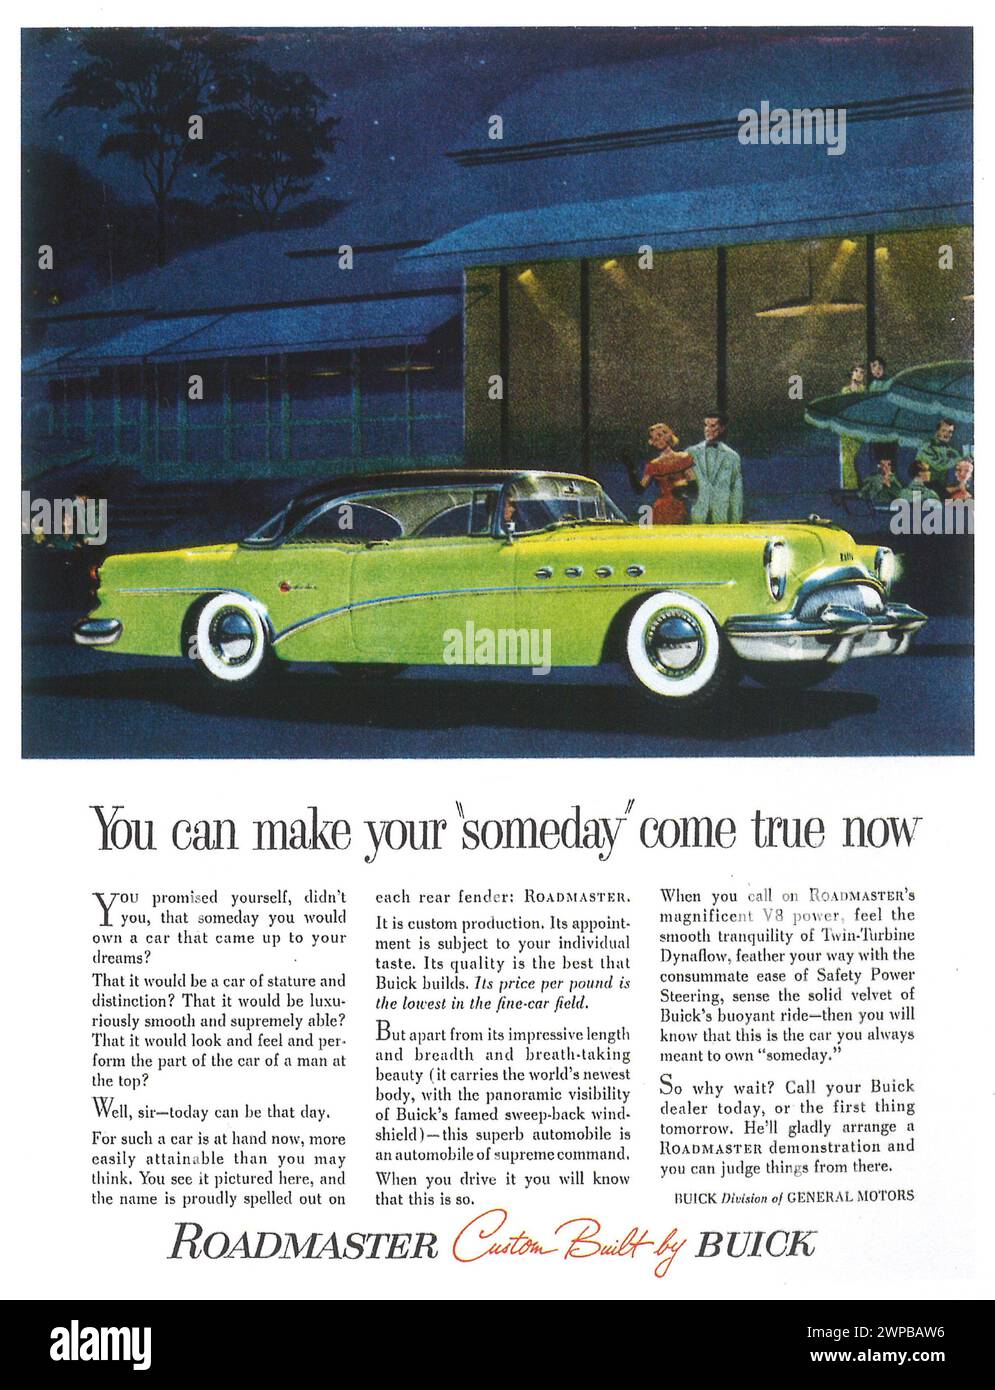 1954 Buick Roadmaster print ad Stock Photo